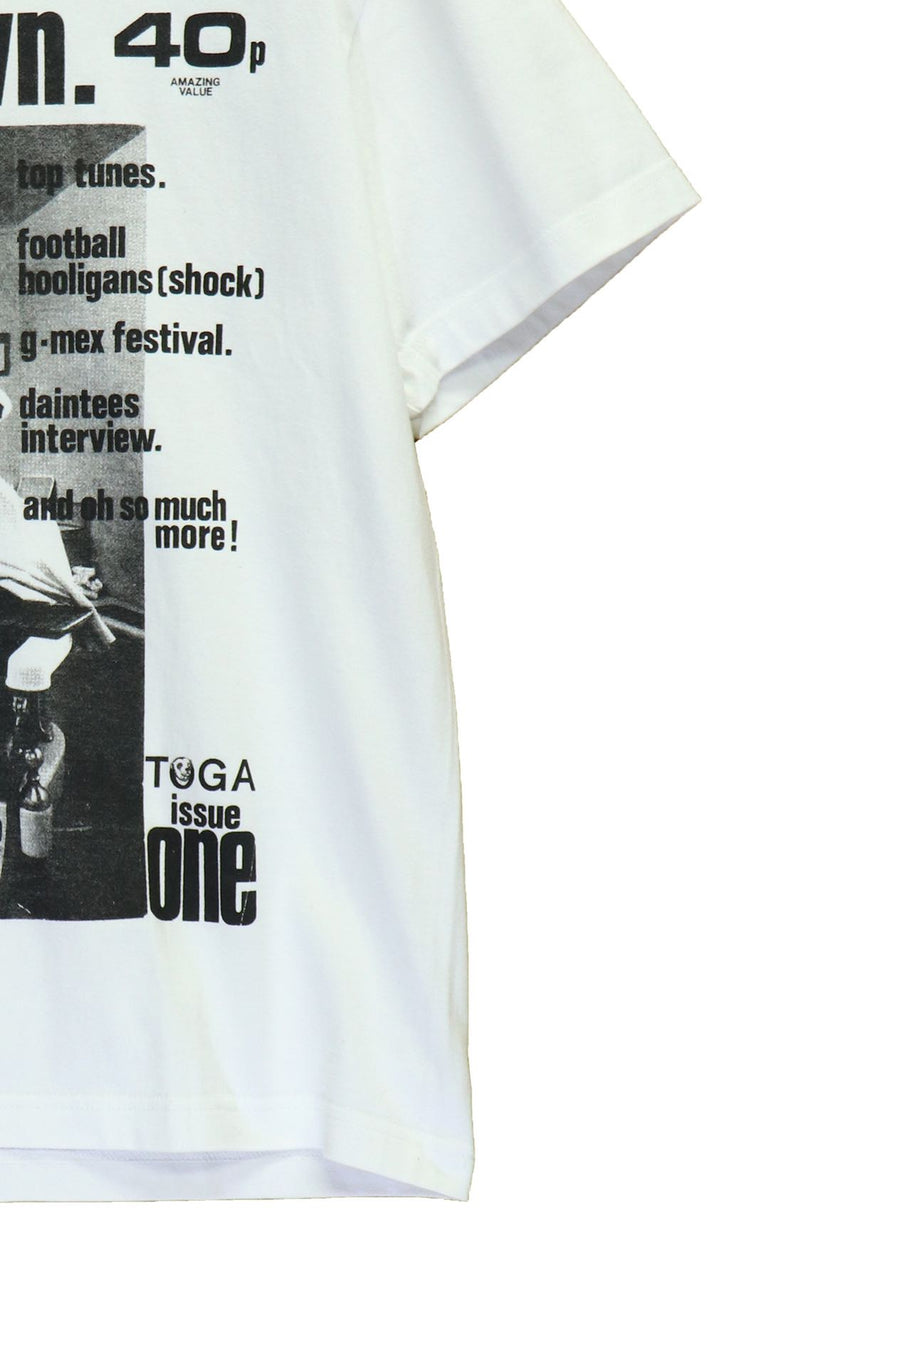 TOGA VIRILIS(トーガ ビリリース)のPrint T-shirt ISSUE ONE BOY'S OWN